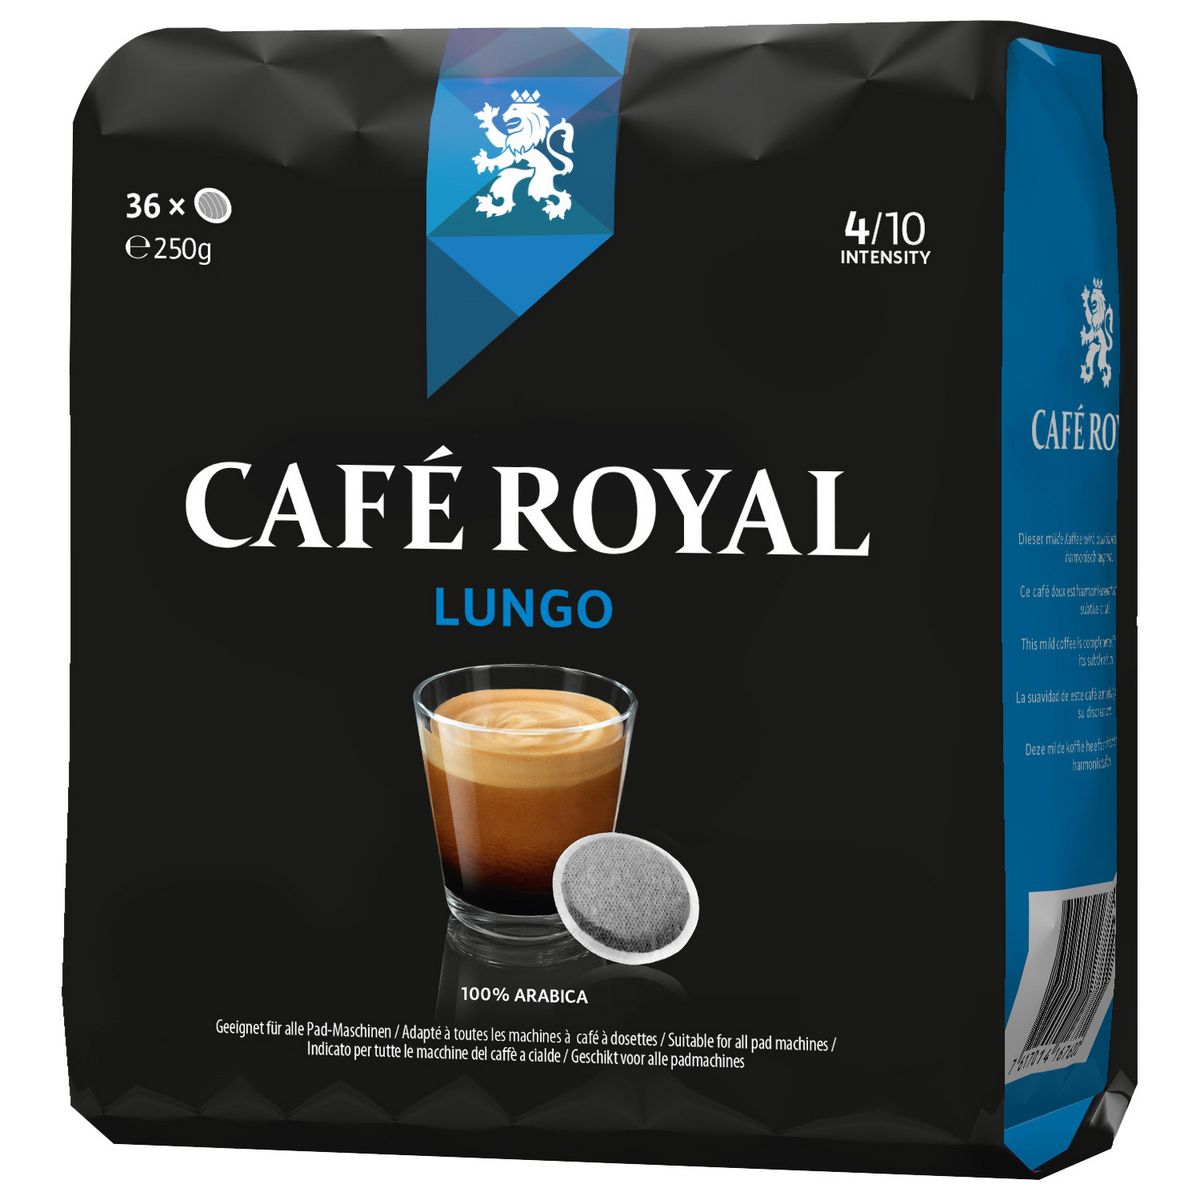 CAFE ROYAL Café Royal lungo dosette x36 -250g pas cher 